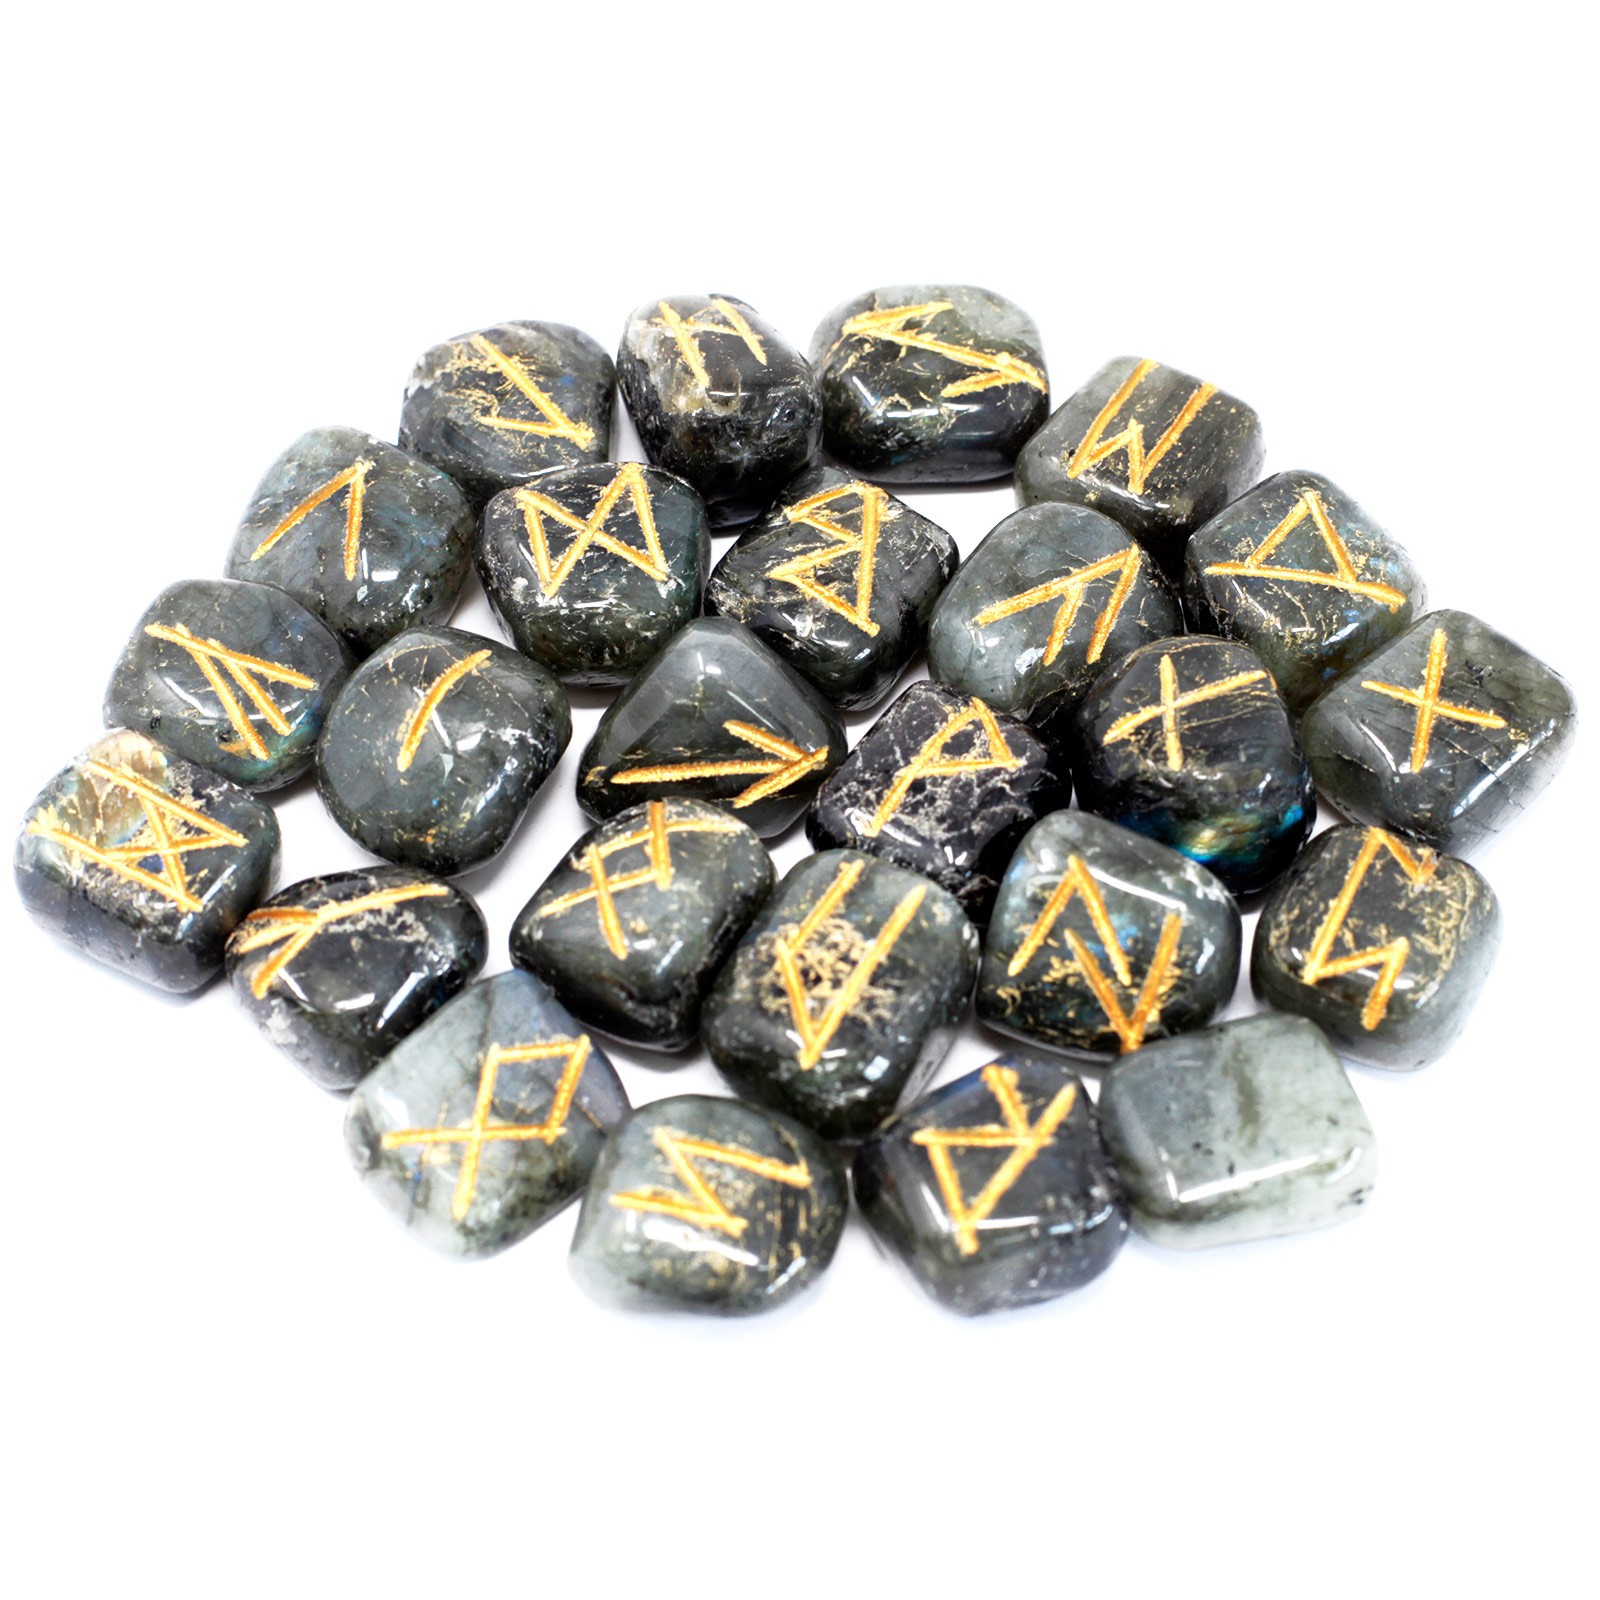 Runes Stone Set in Pouch -crystal Labradorite